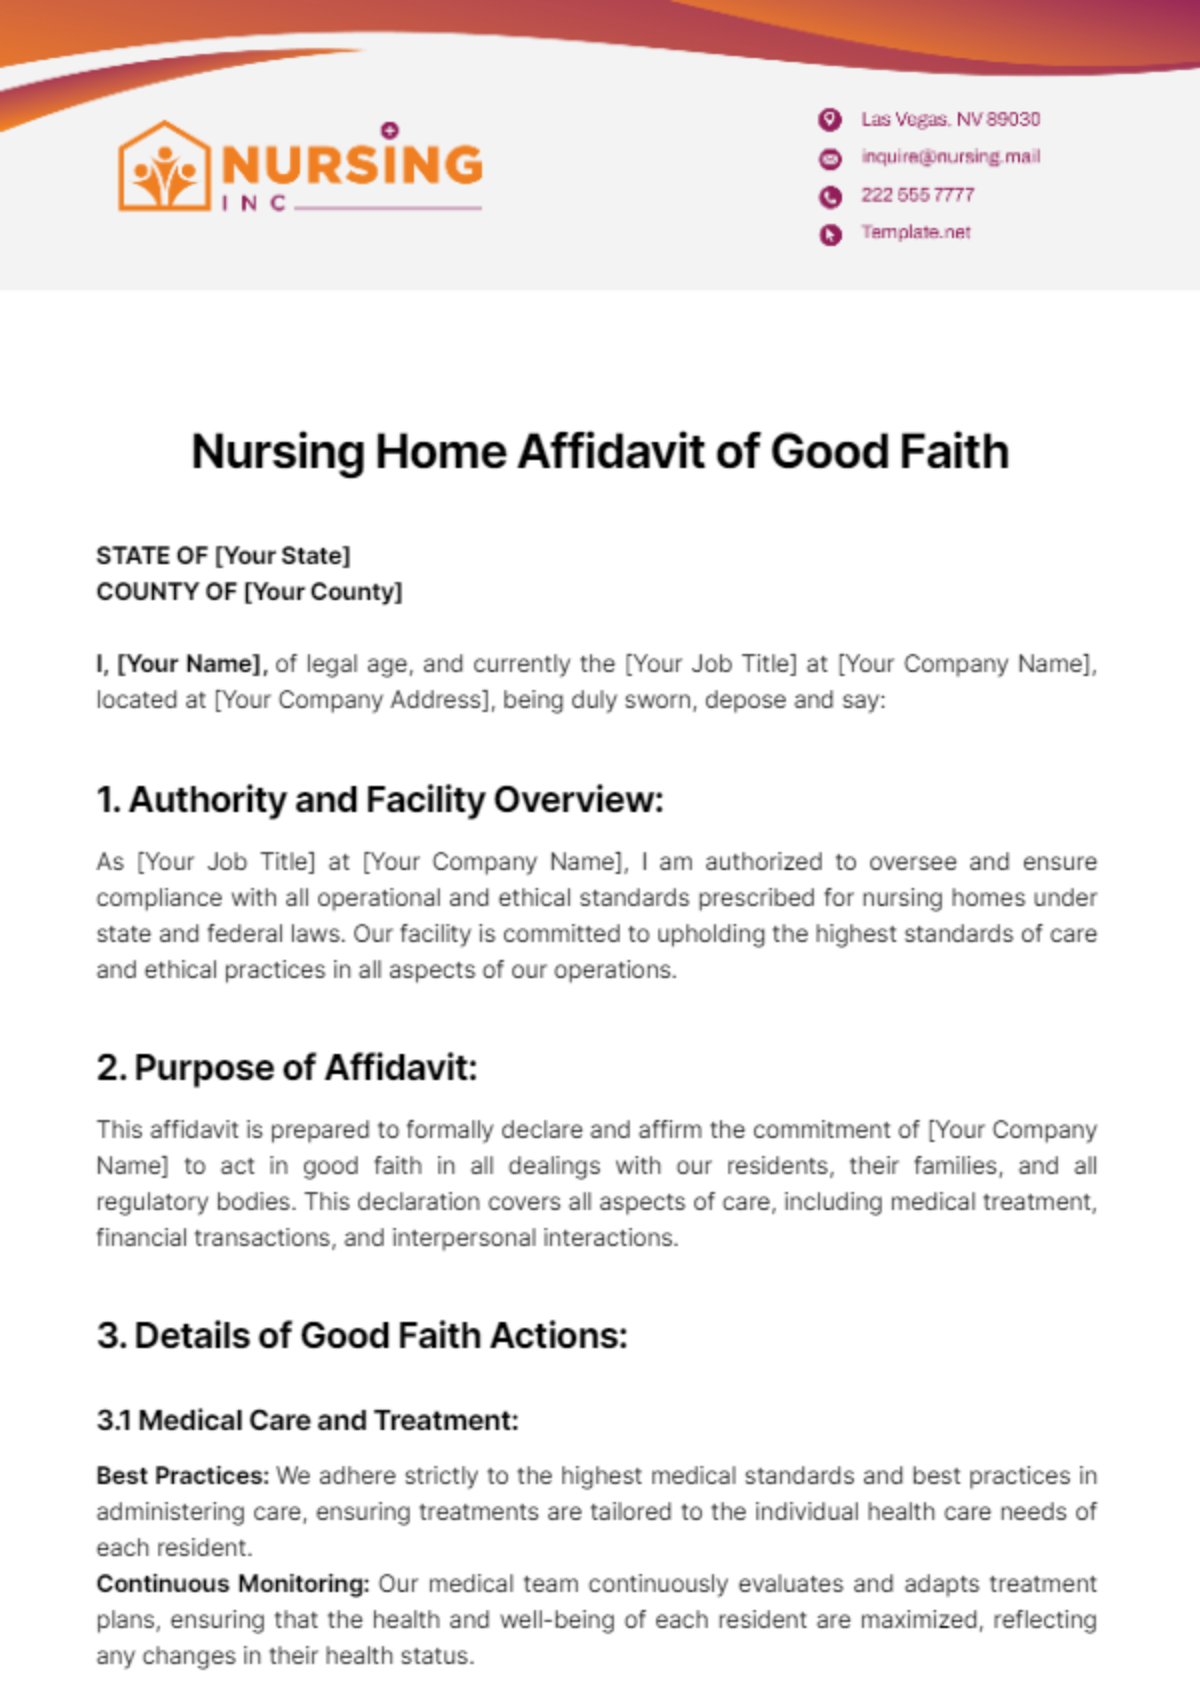 Nursing Home Affidavit of Good Faith Template